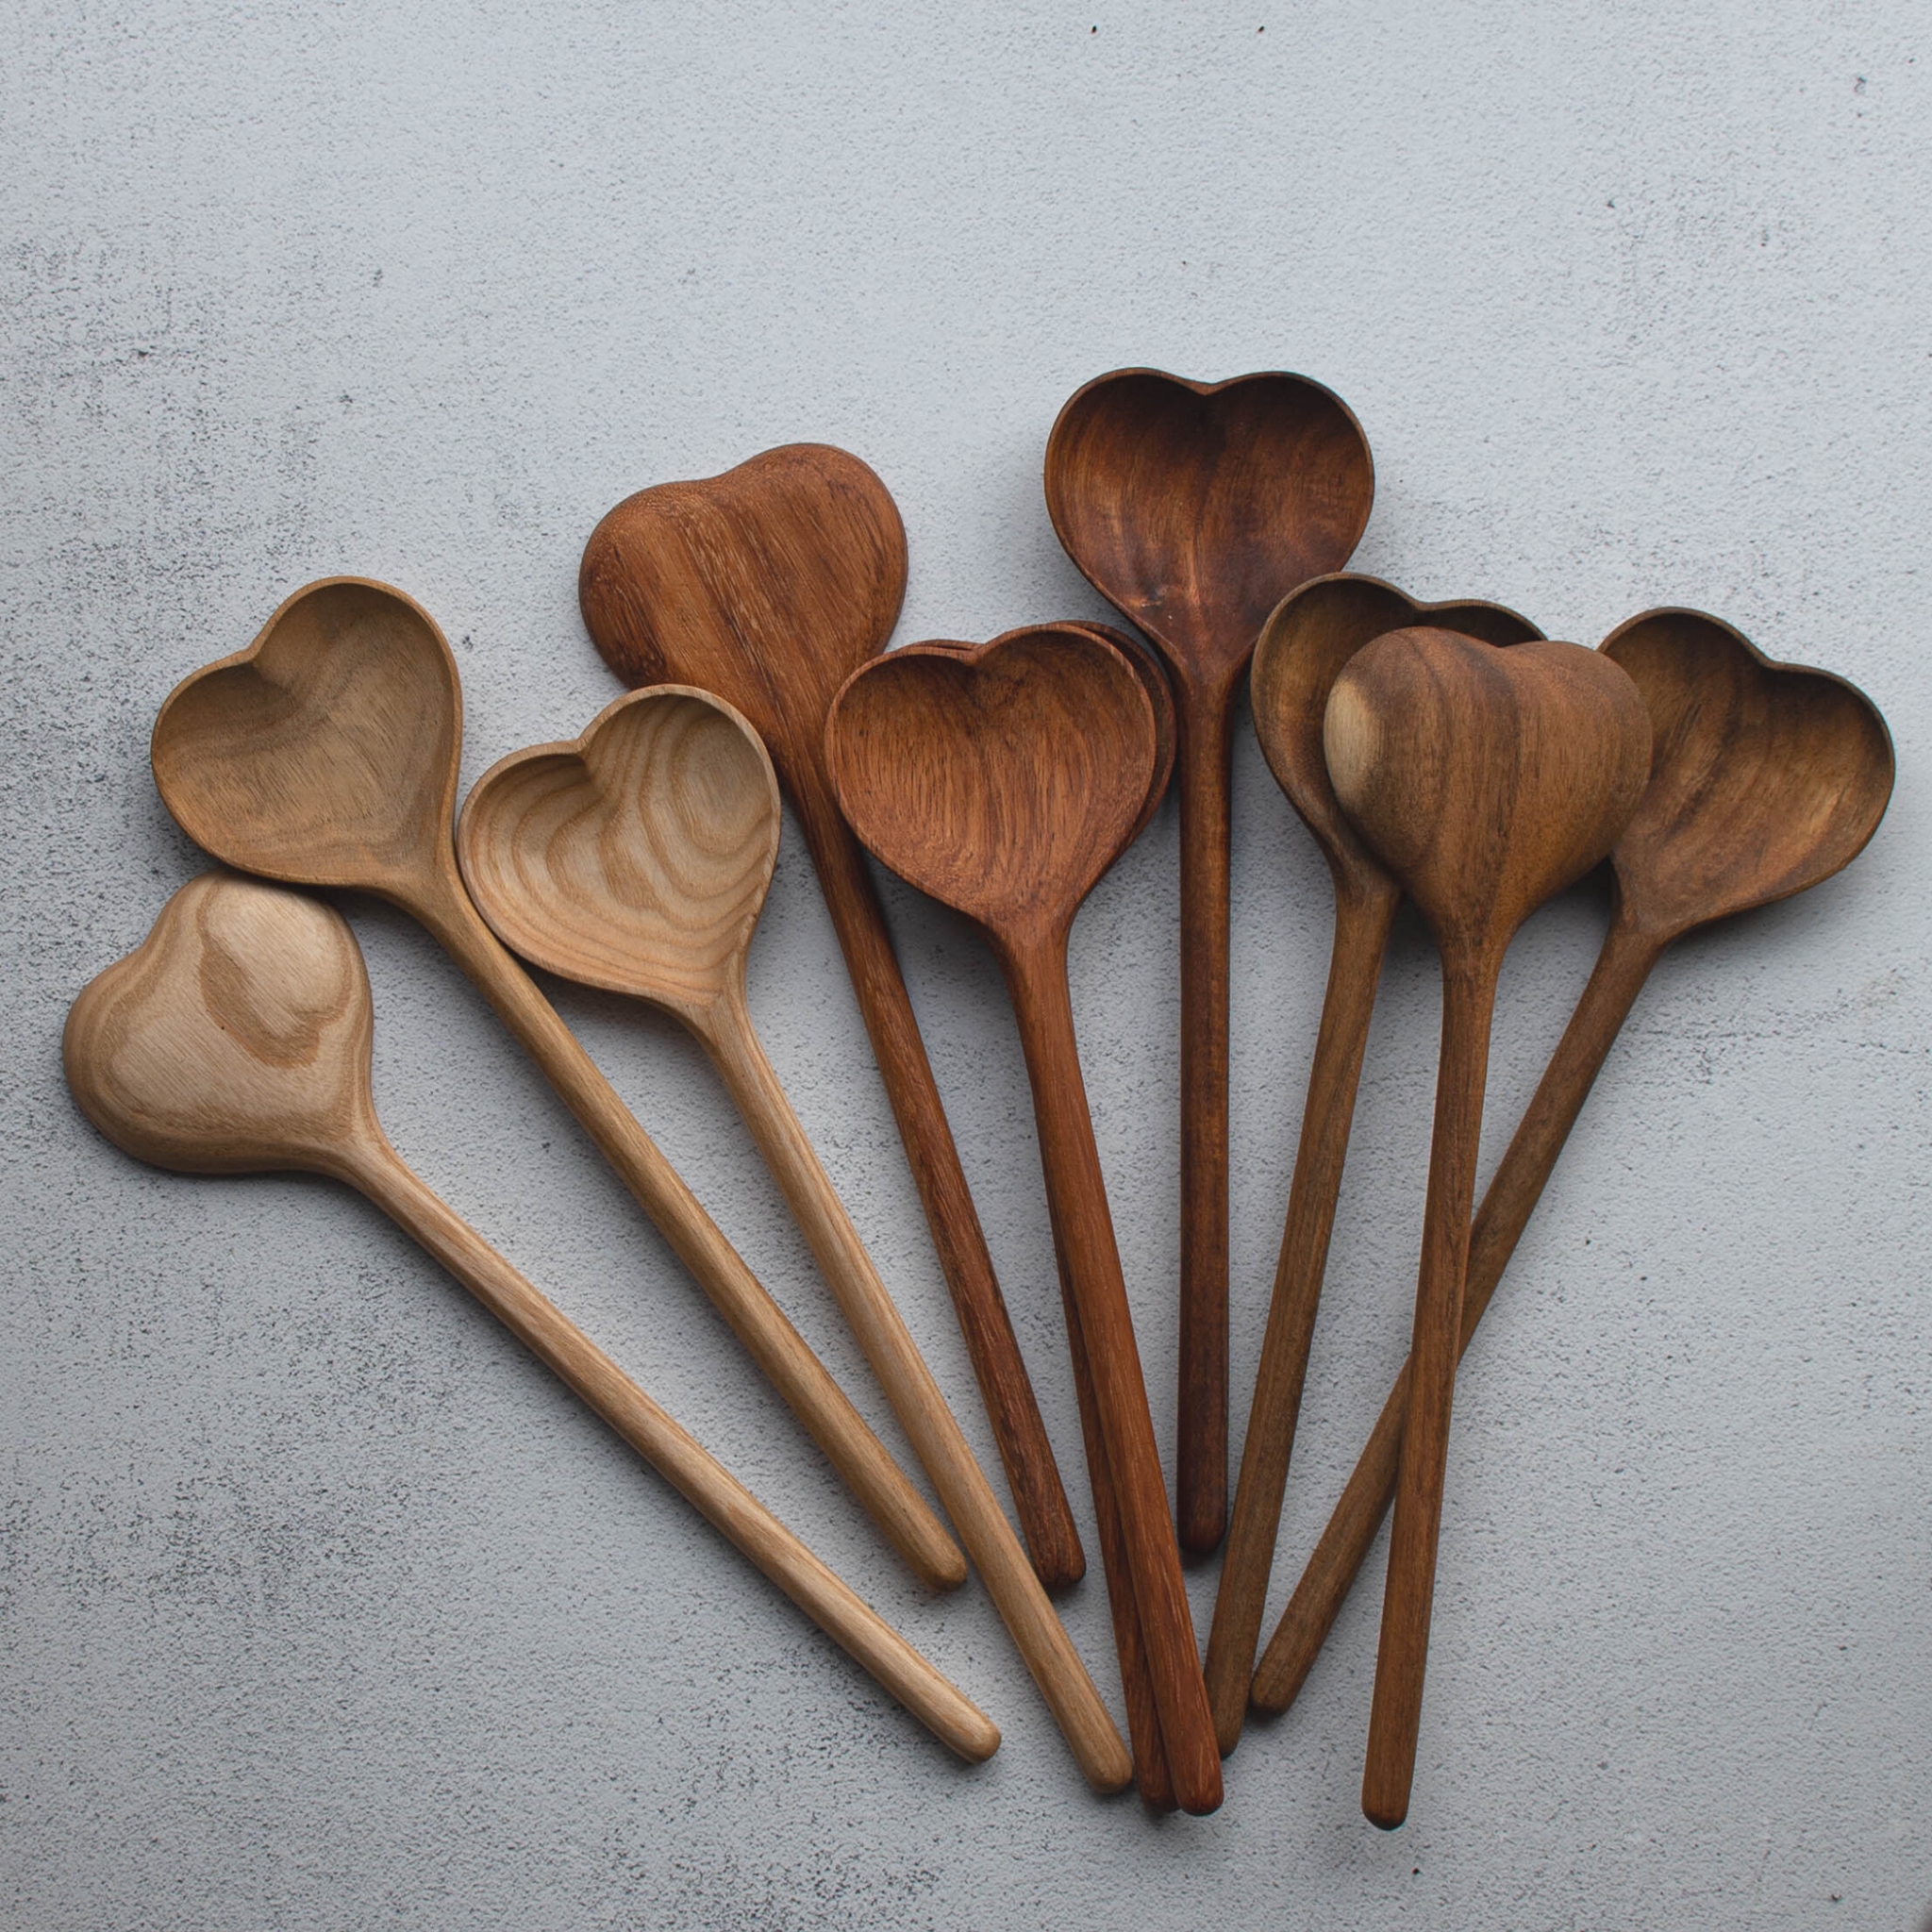 Cherry wooden spoons heart shape-Love gift ideas